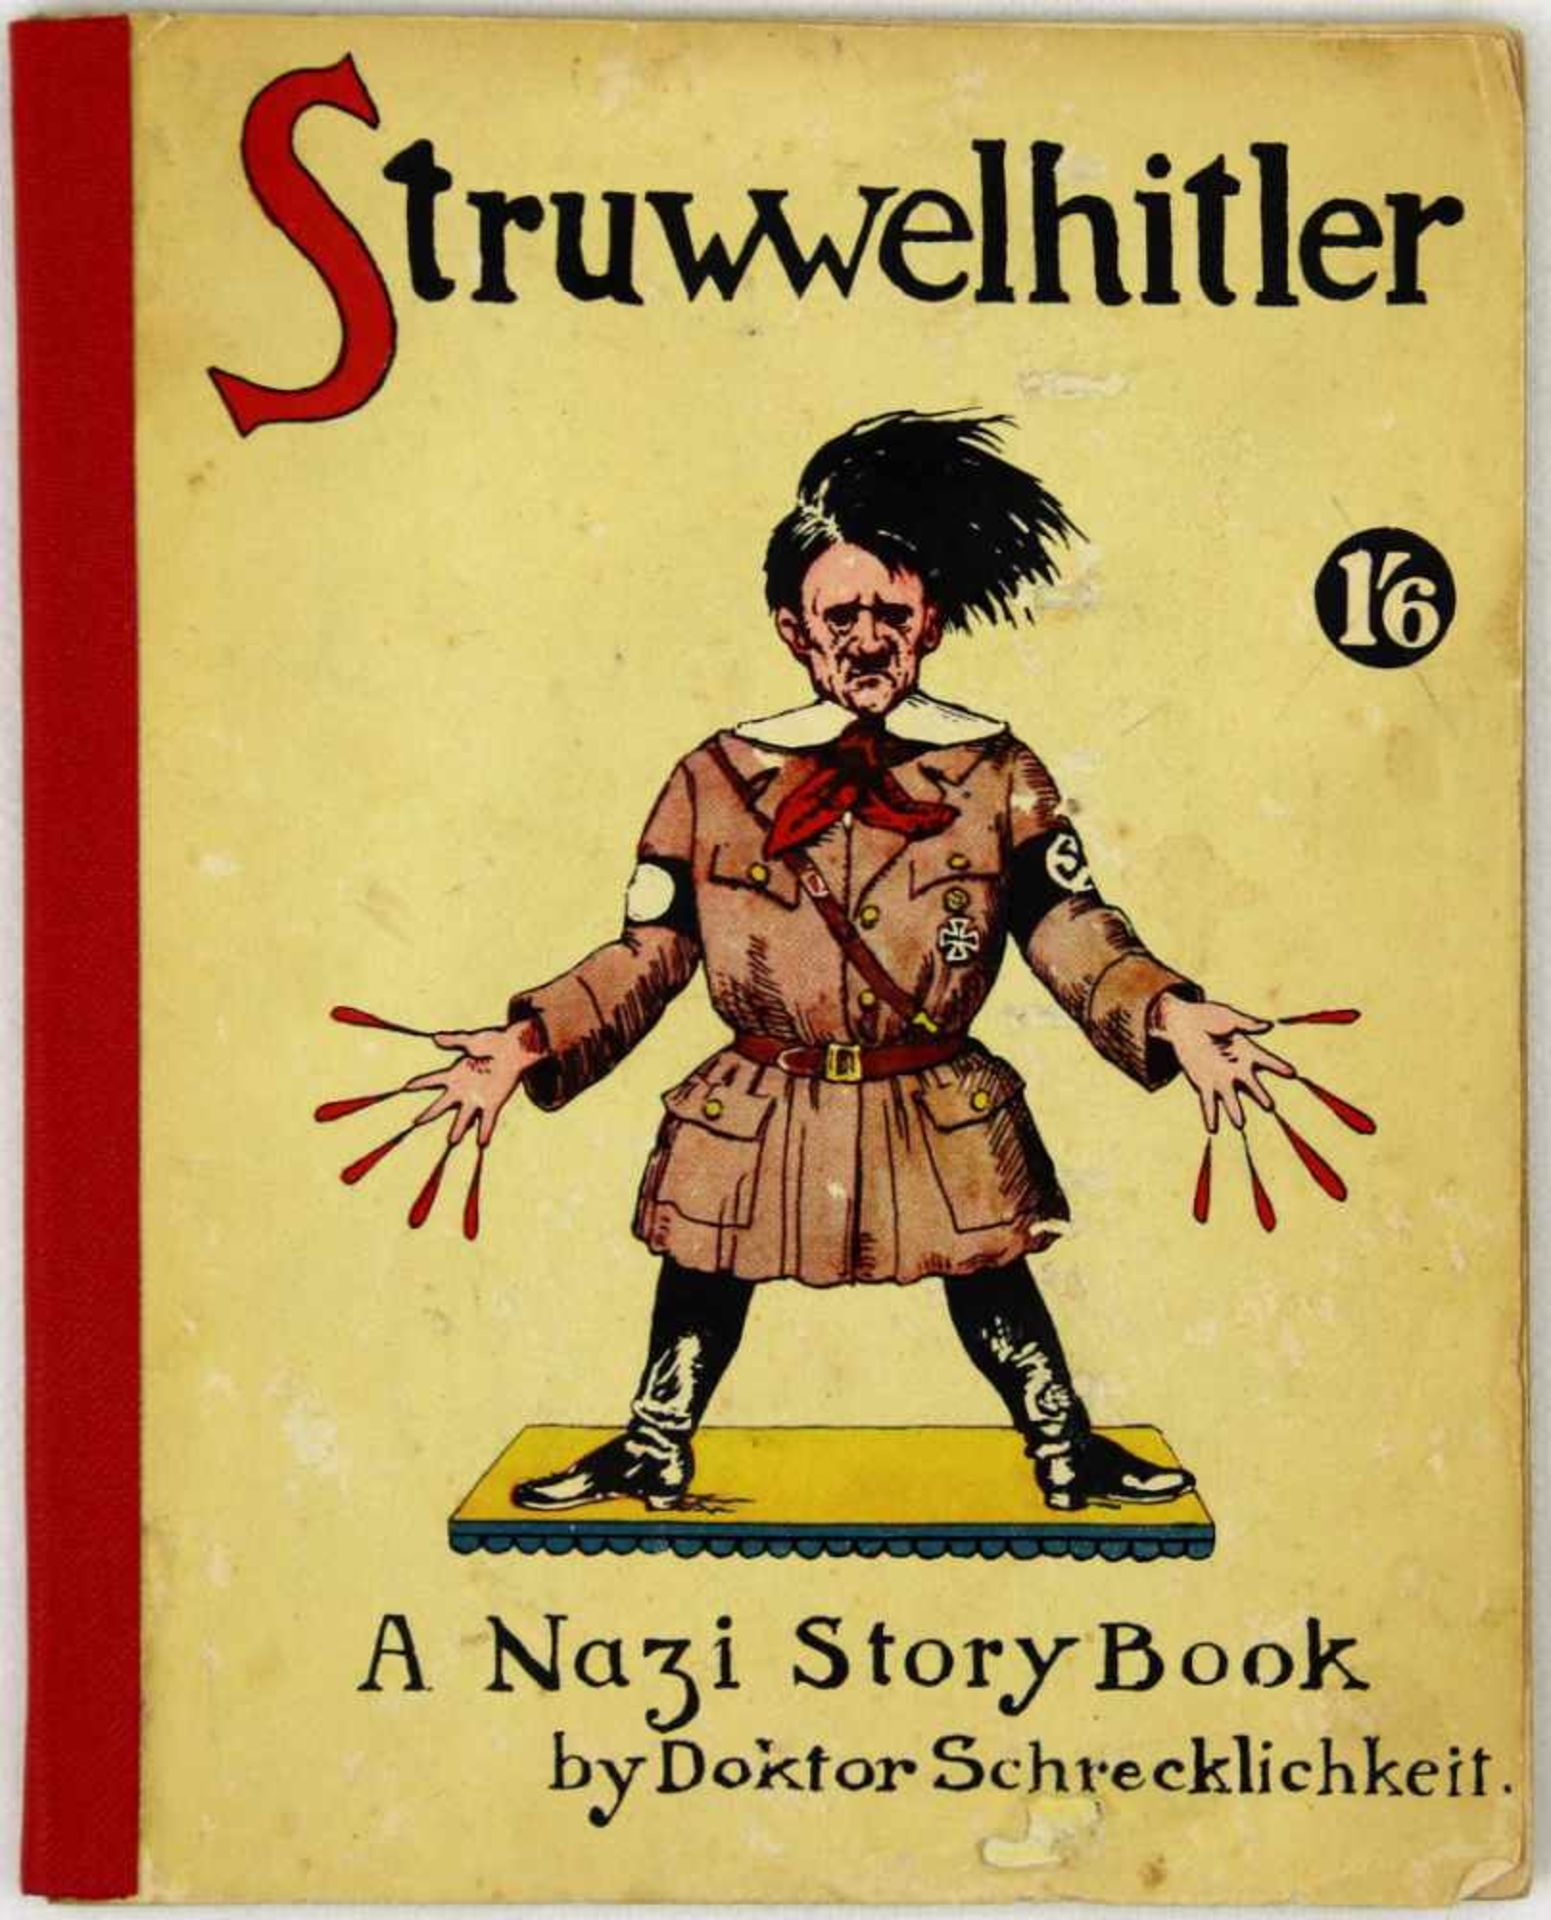 Struwwelpeter und Struwwelpetriaden. - Spence, Robert and Philip: Struwwelhitler. A Nazi Story Book